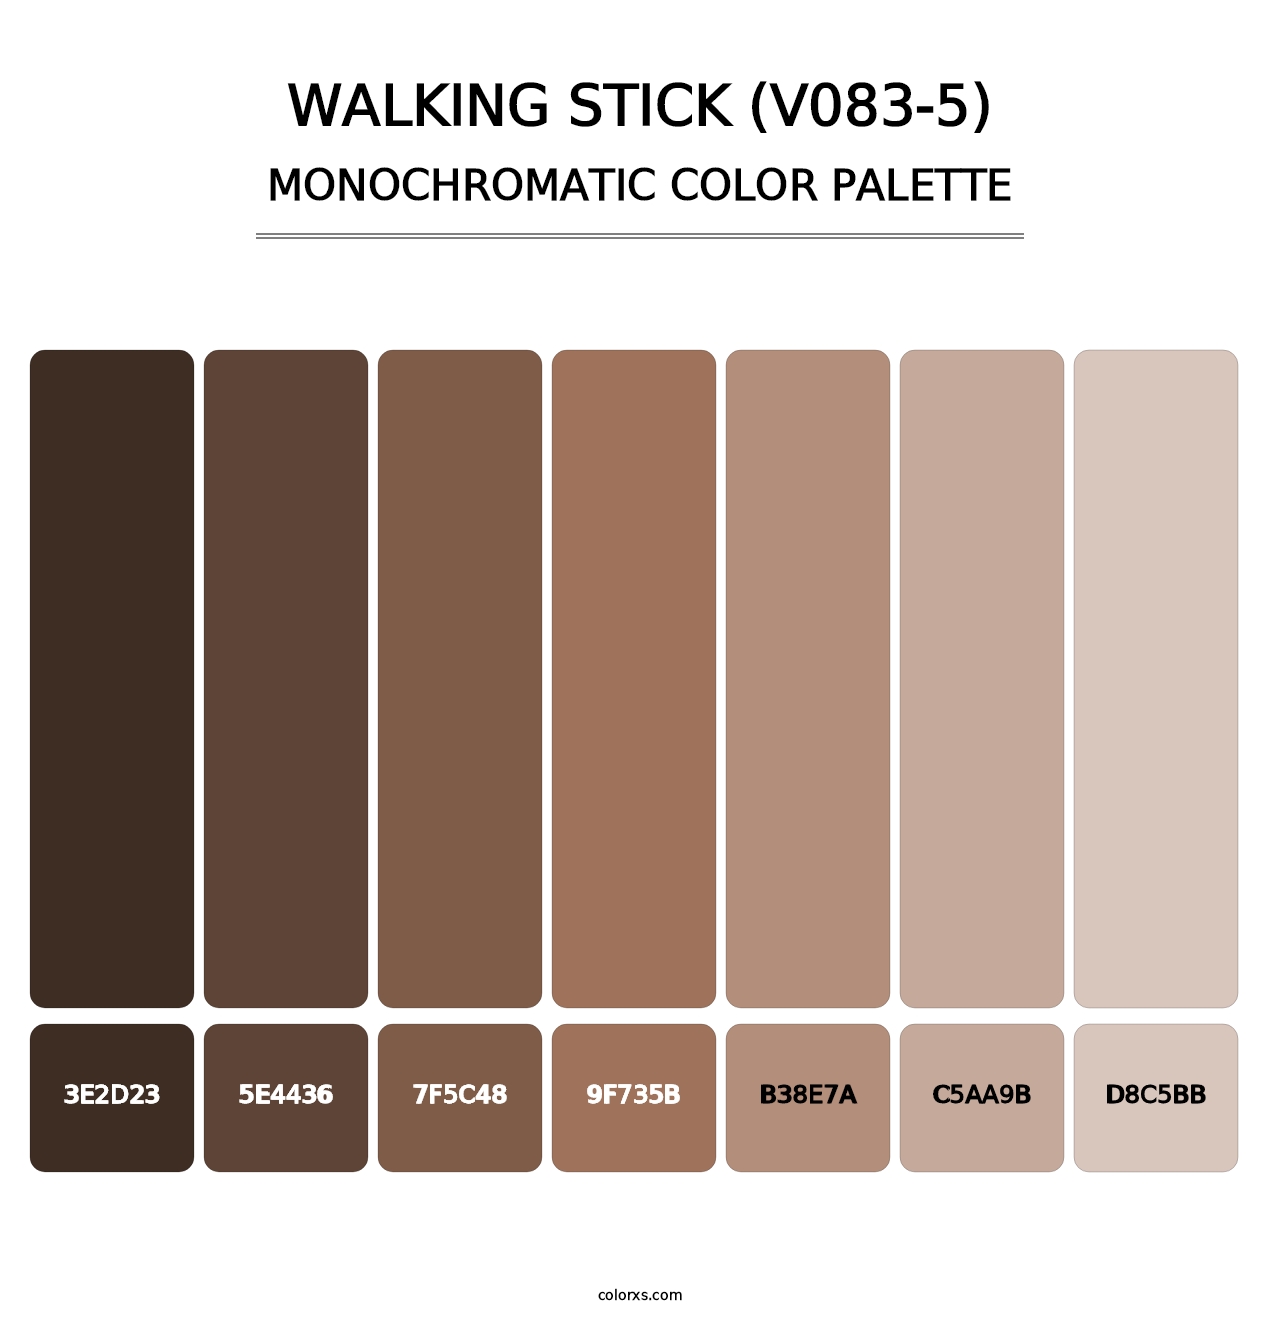 Walking Stick (V083-5) - Monochromatic Color Palette